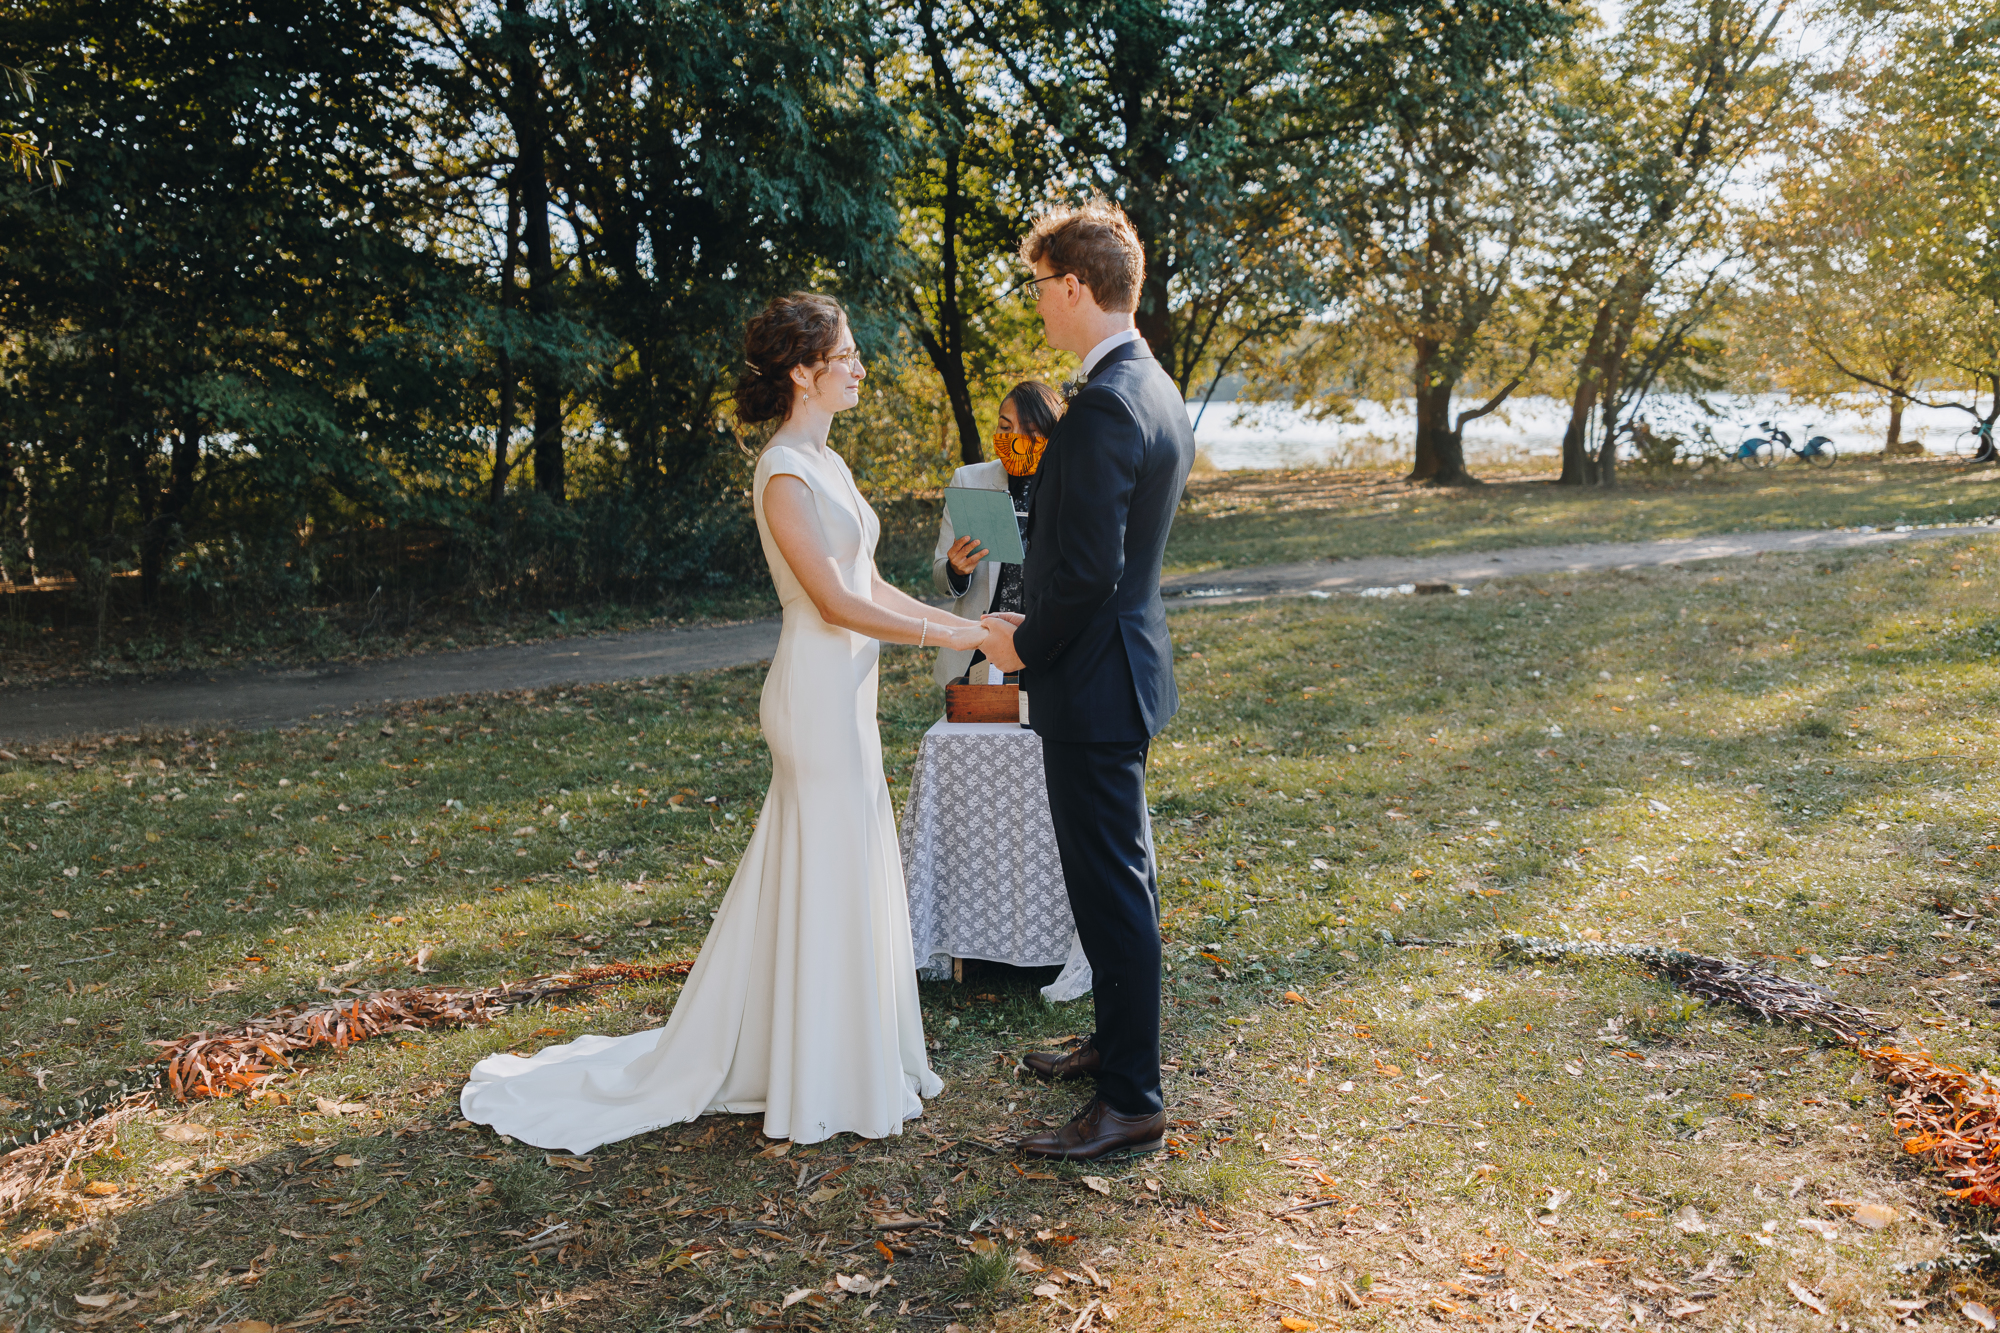 Wedding ceremony in Prospect Park Brooklyn